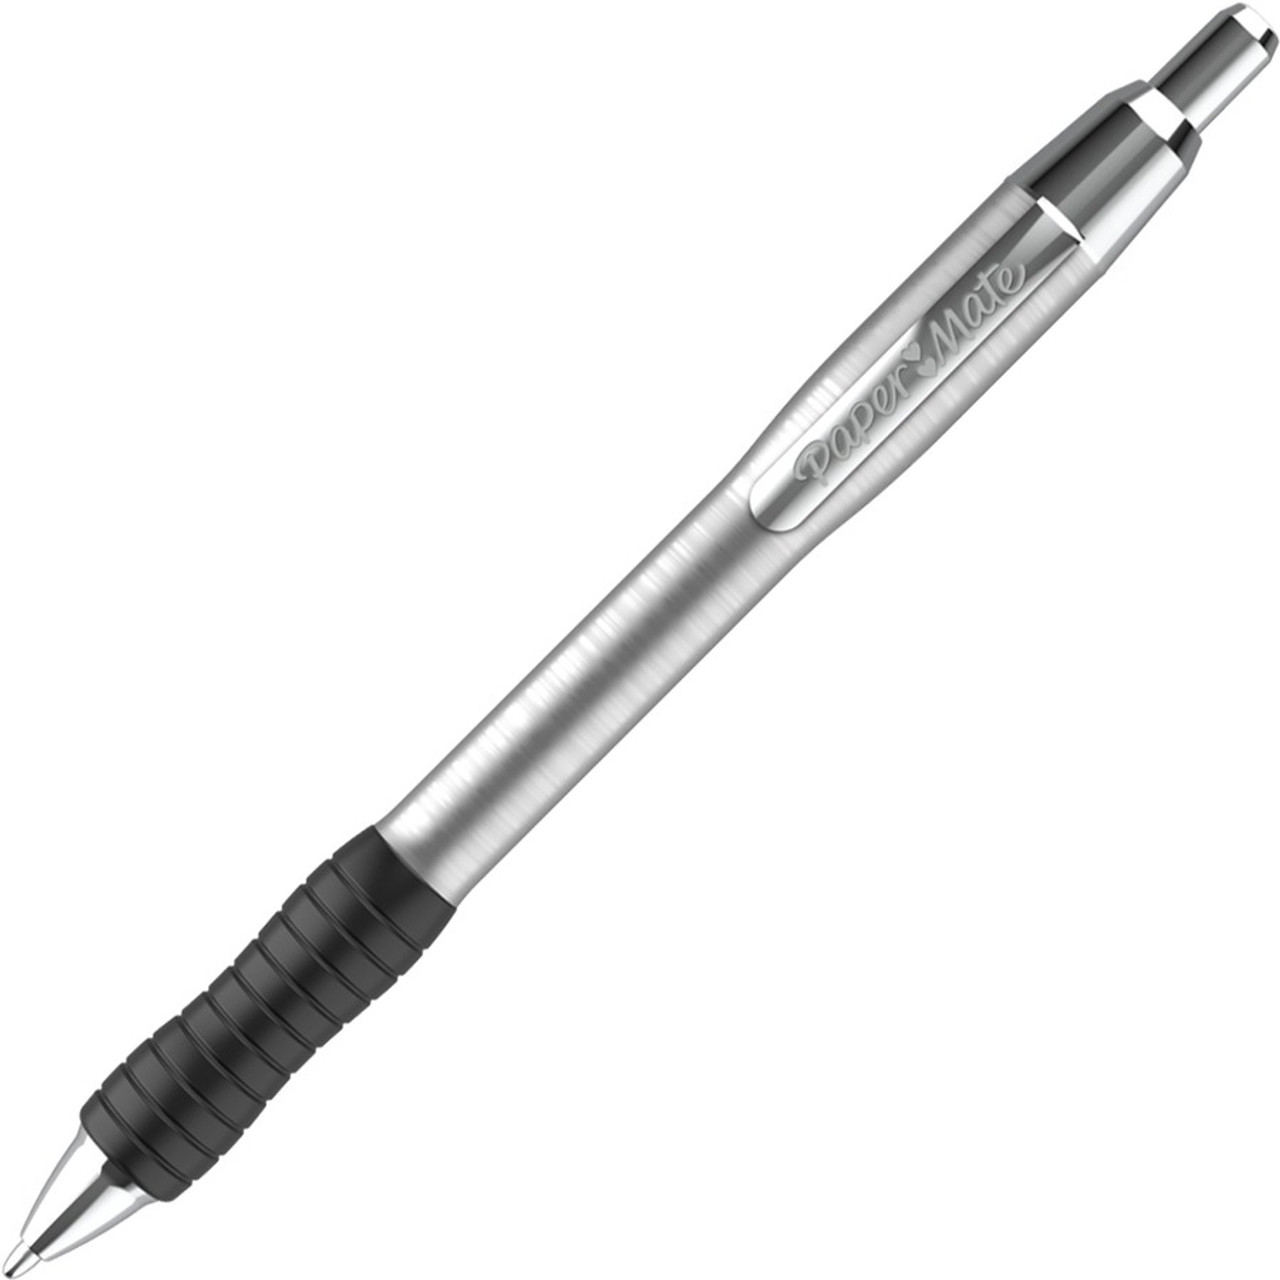 Paper Mate Profile Ball Point Pen, Retractable, B (1.4 mm), Black Ink - 12 pens